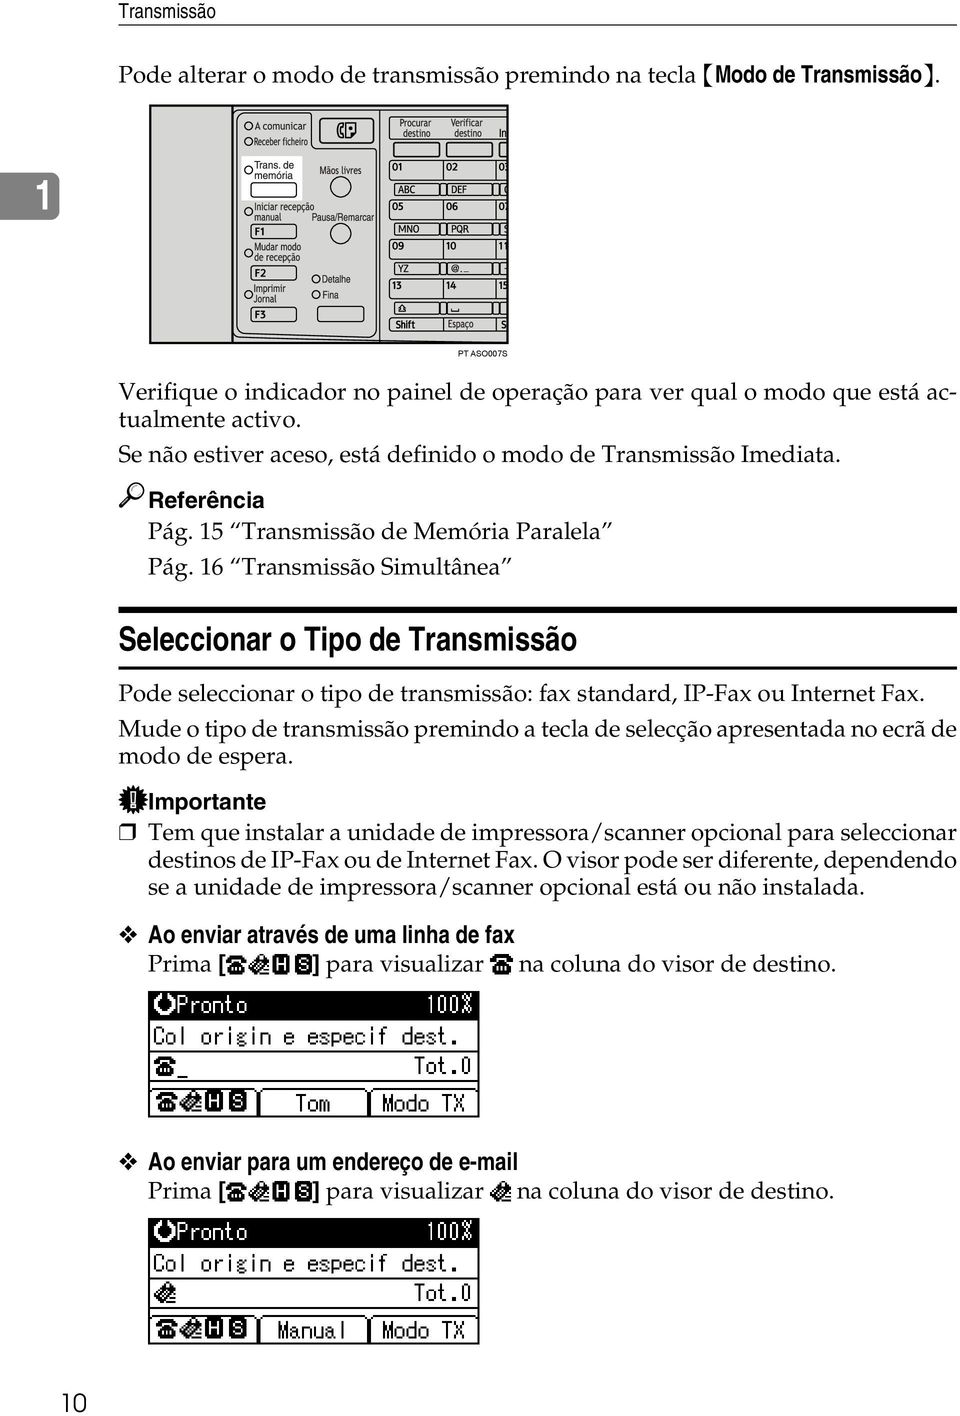 16 Transmissão Simultânea Seleccionar o Tipo de Transmissão Pode seleccionar o tipo de transmissão: fax standard, IP-Fax ou Internet Fax.